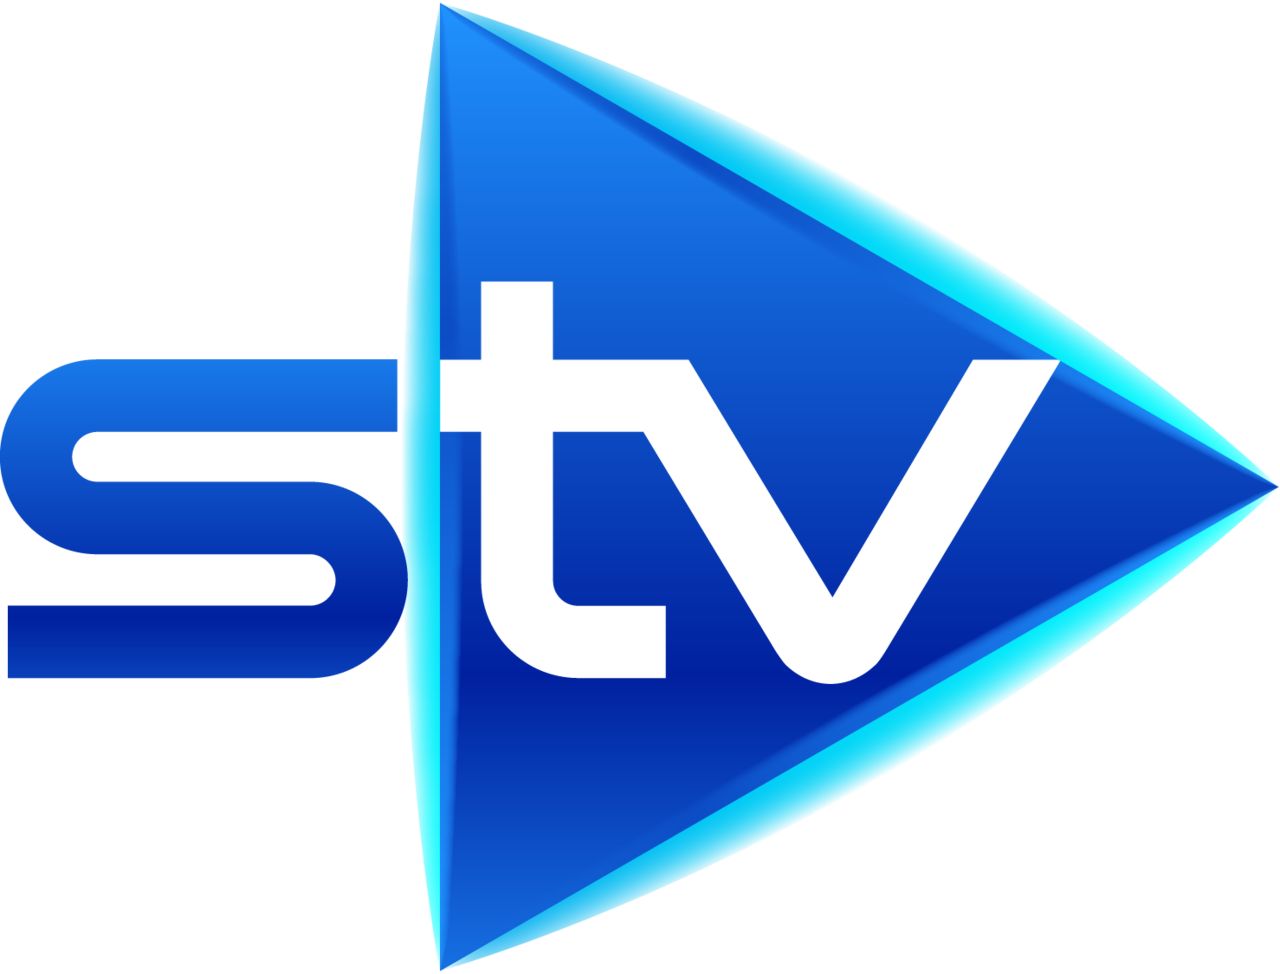 STV_logo_2014-1.png